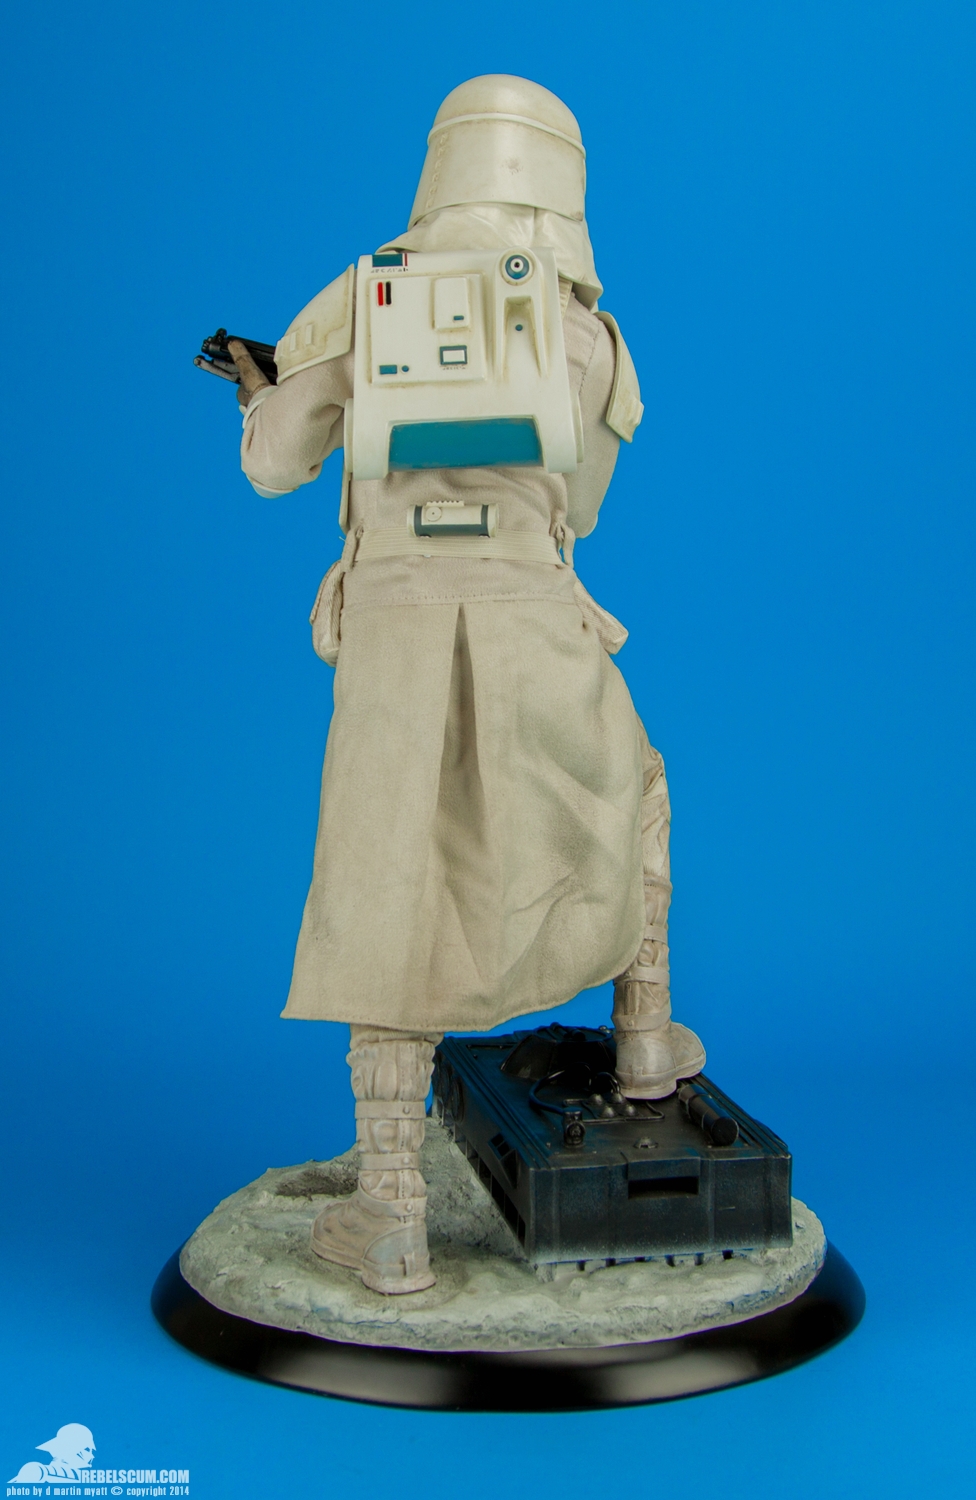 Snowtrooper-Premium-Format-Figure-Sideshow-Collectibles-004.jpg